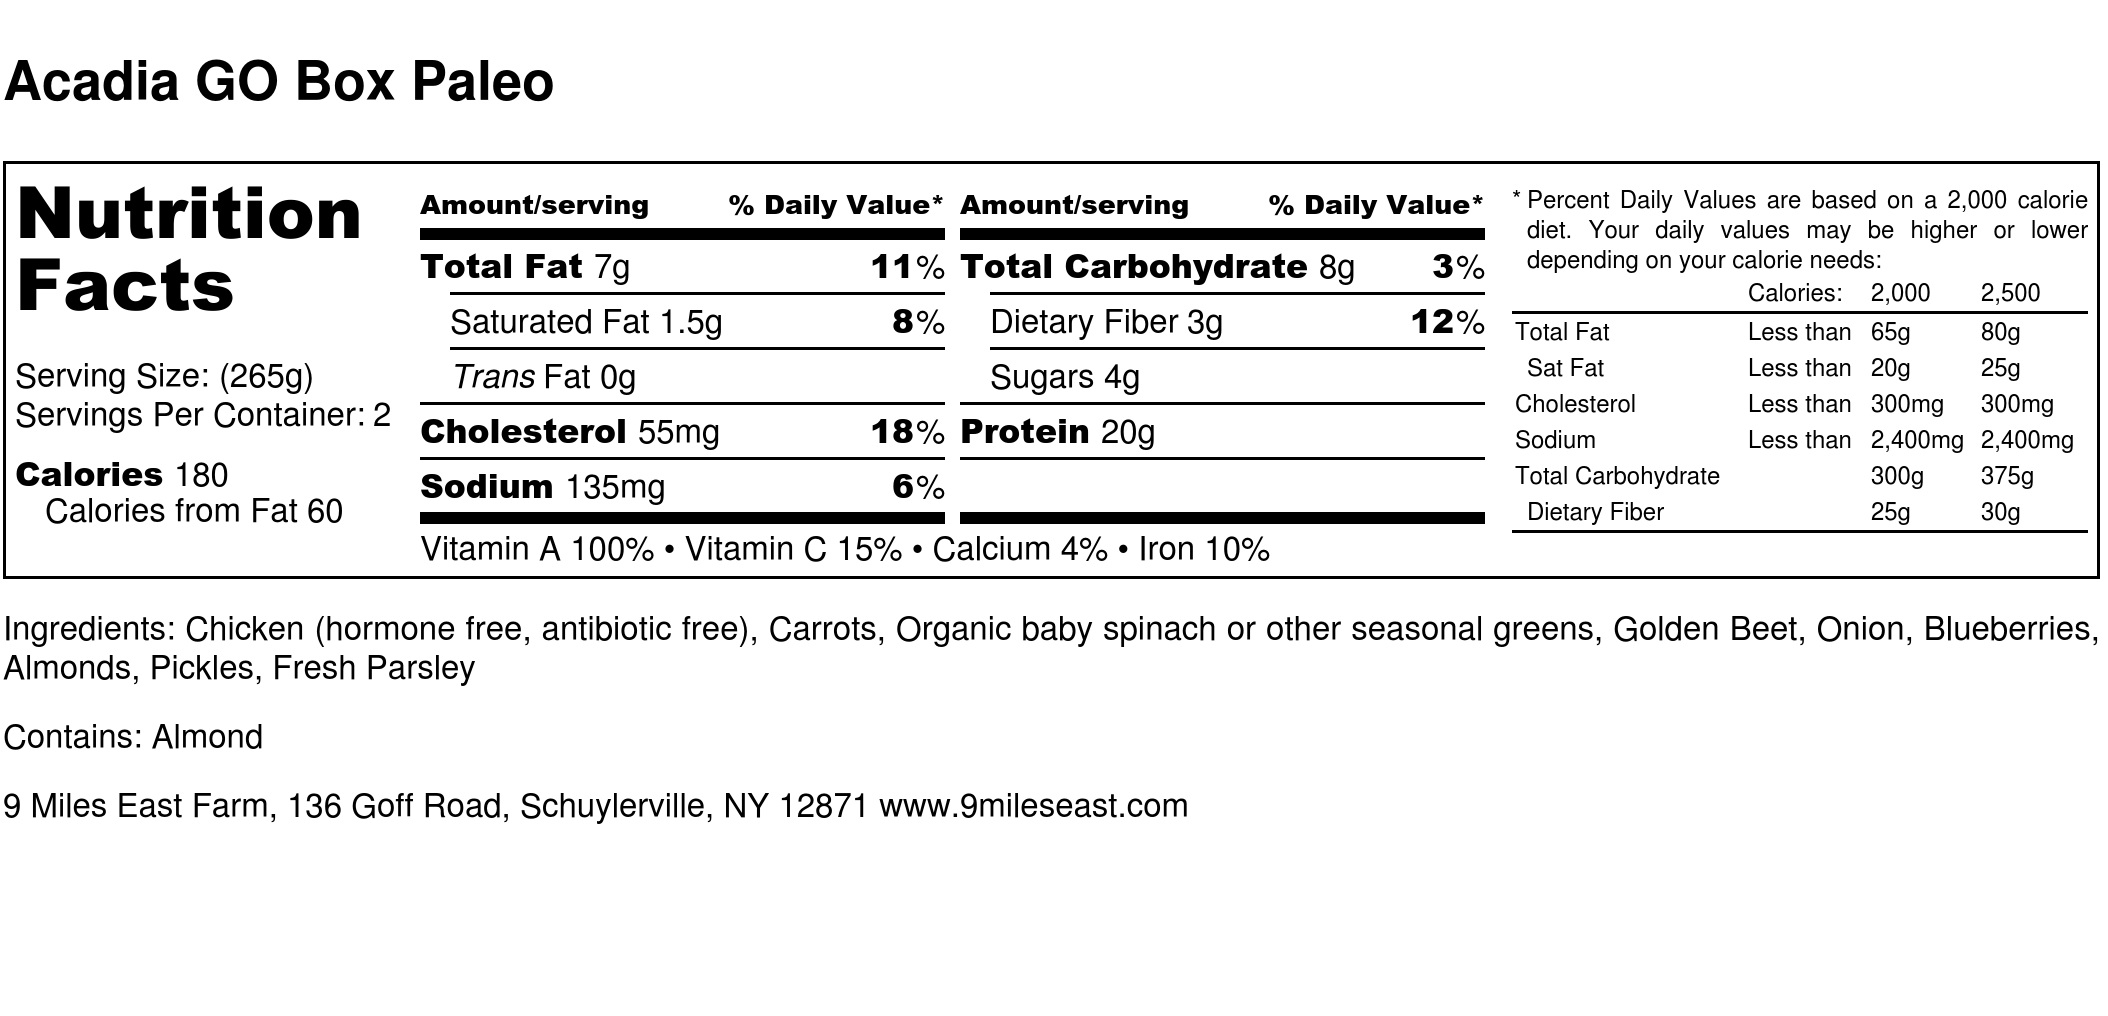 Acadia GO Box Paleo - Nutrition Label.jpg